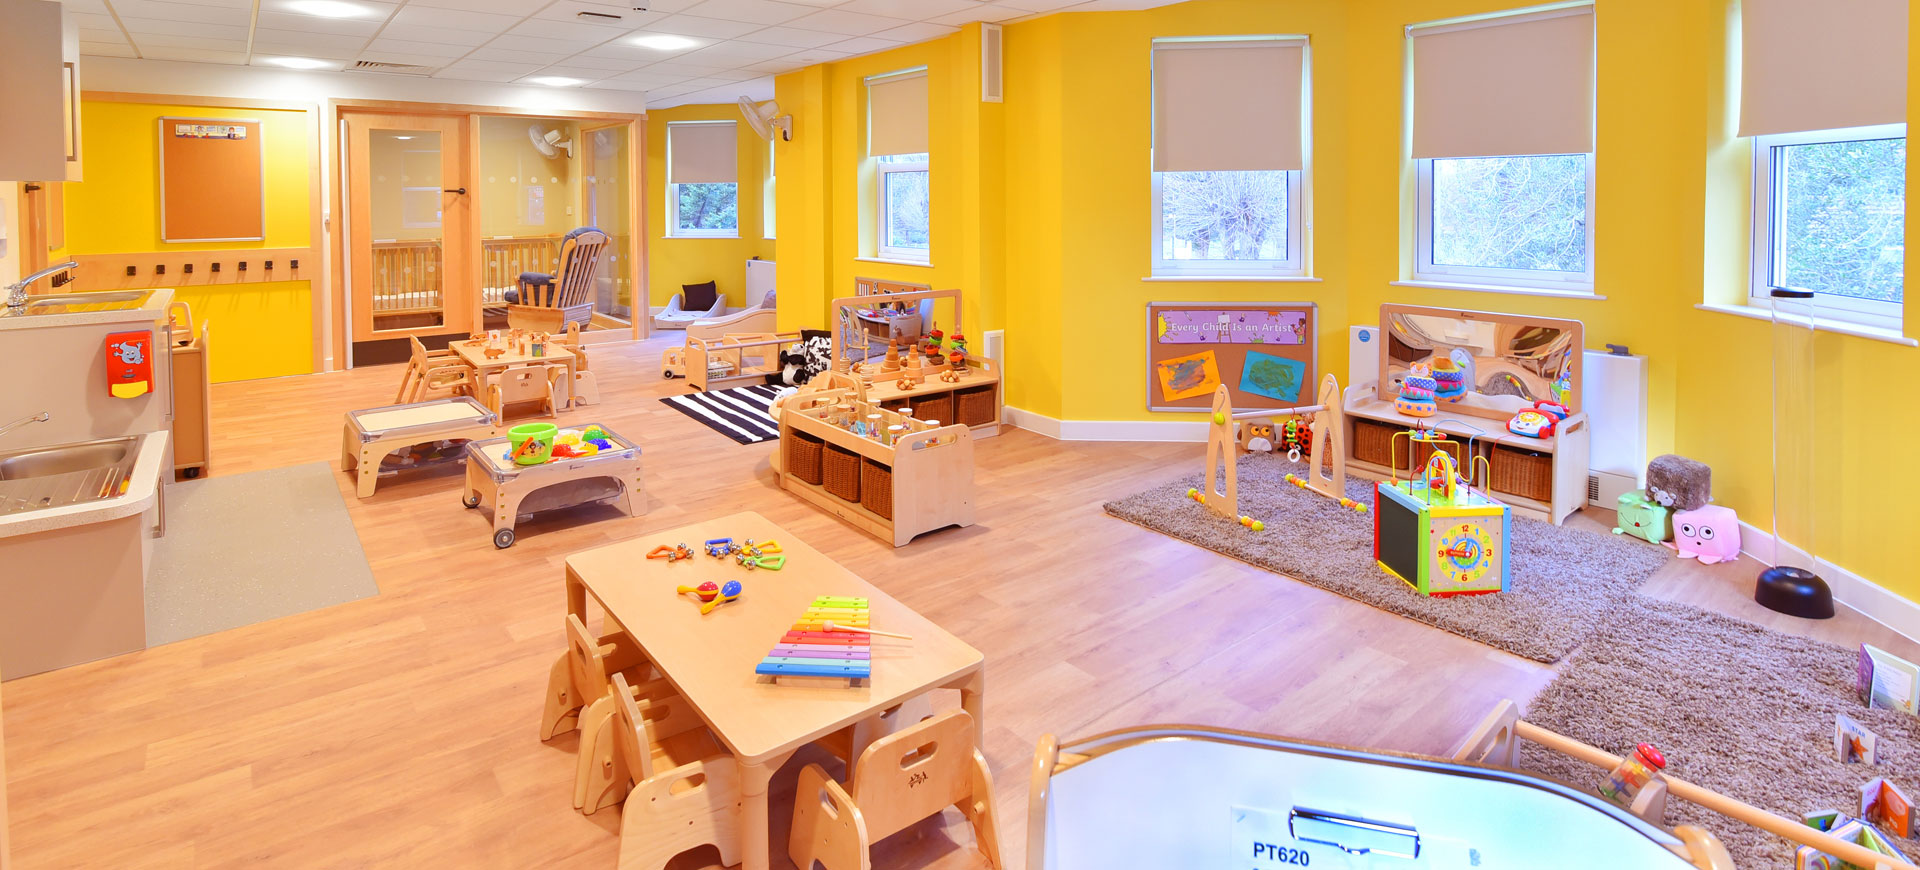 Leatherhead Day Nursery and Preschool